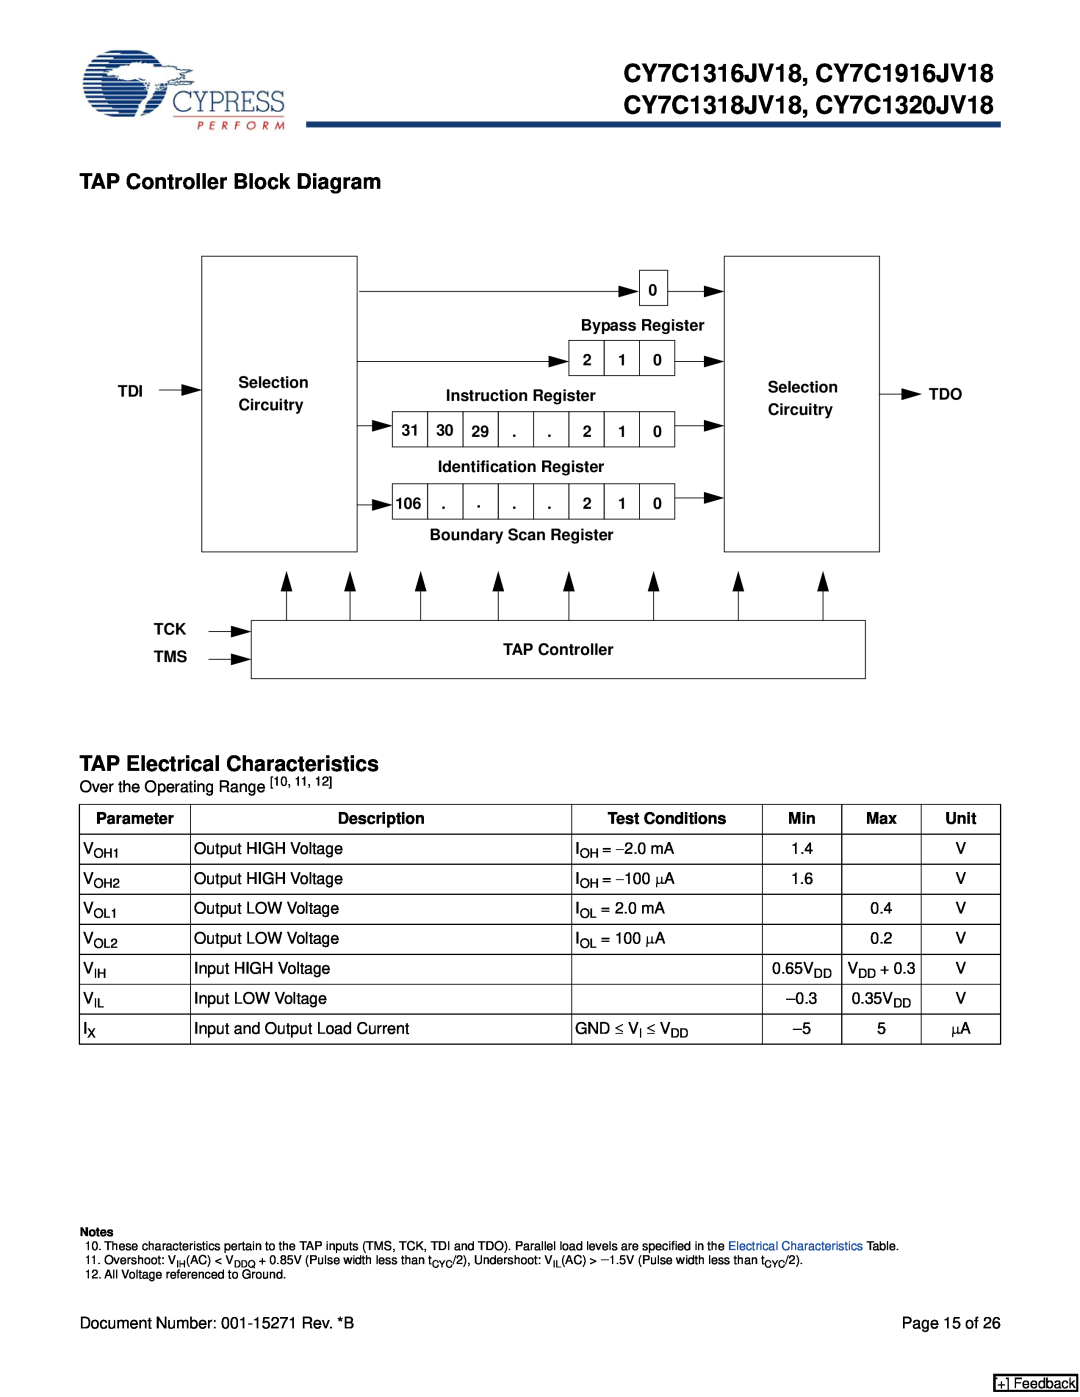 Cypress CY7C1916JV18, CY7C1316JV18, CY7C1320JV18, CY7C1318JV18 TAP Controller Block Diagram, TAP Electrical Characteristics 